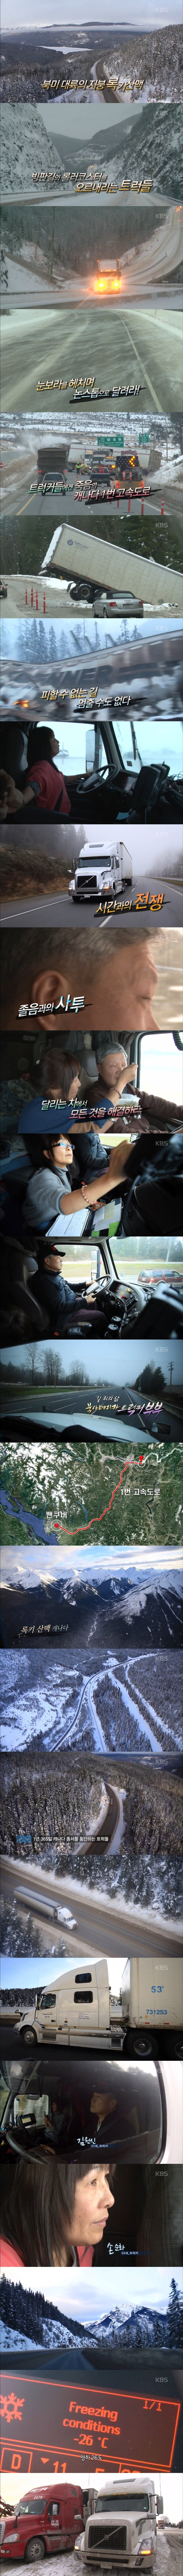 The Korean Trucker couple in Canada.JPG